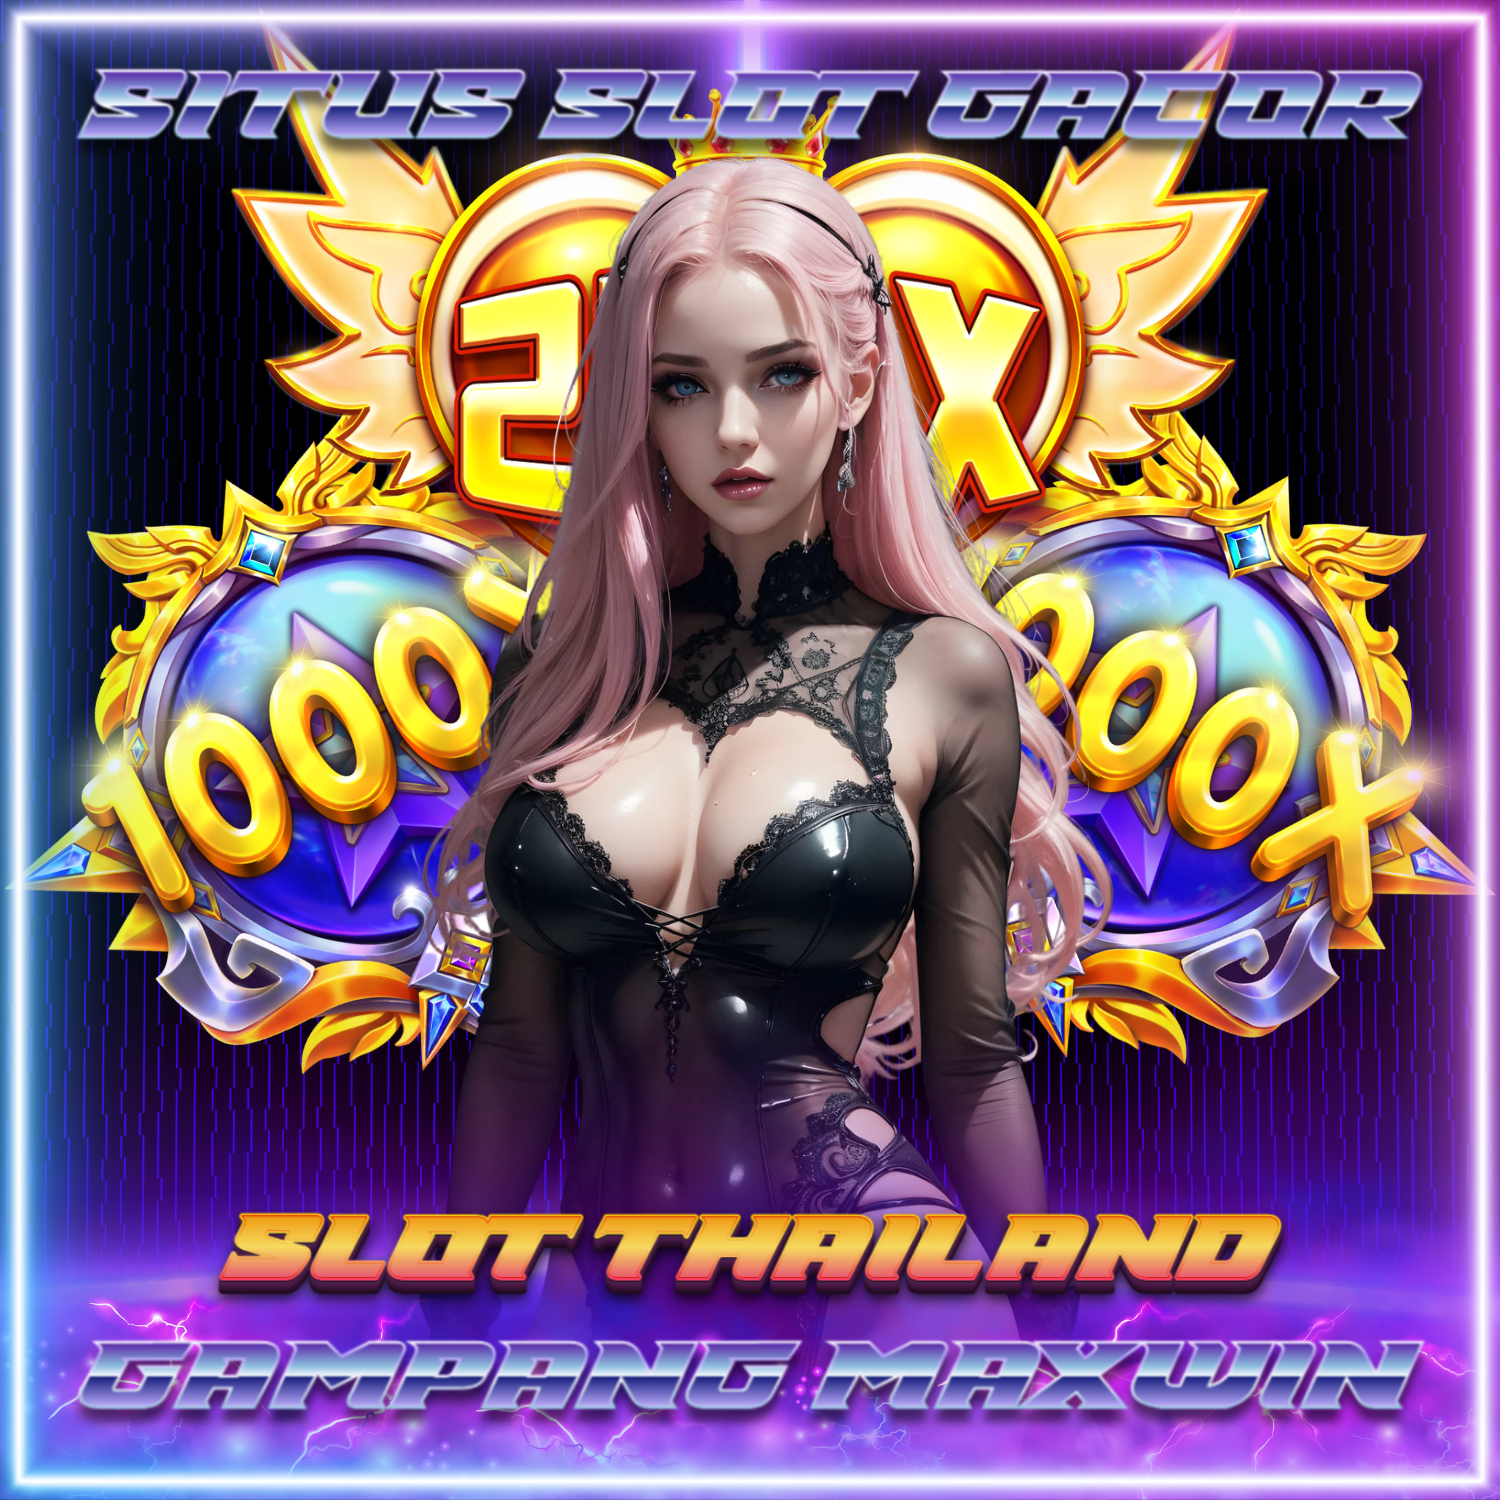 slot thailand,slot gacor,judi online,slot online,nexus slot,